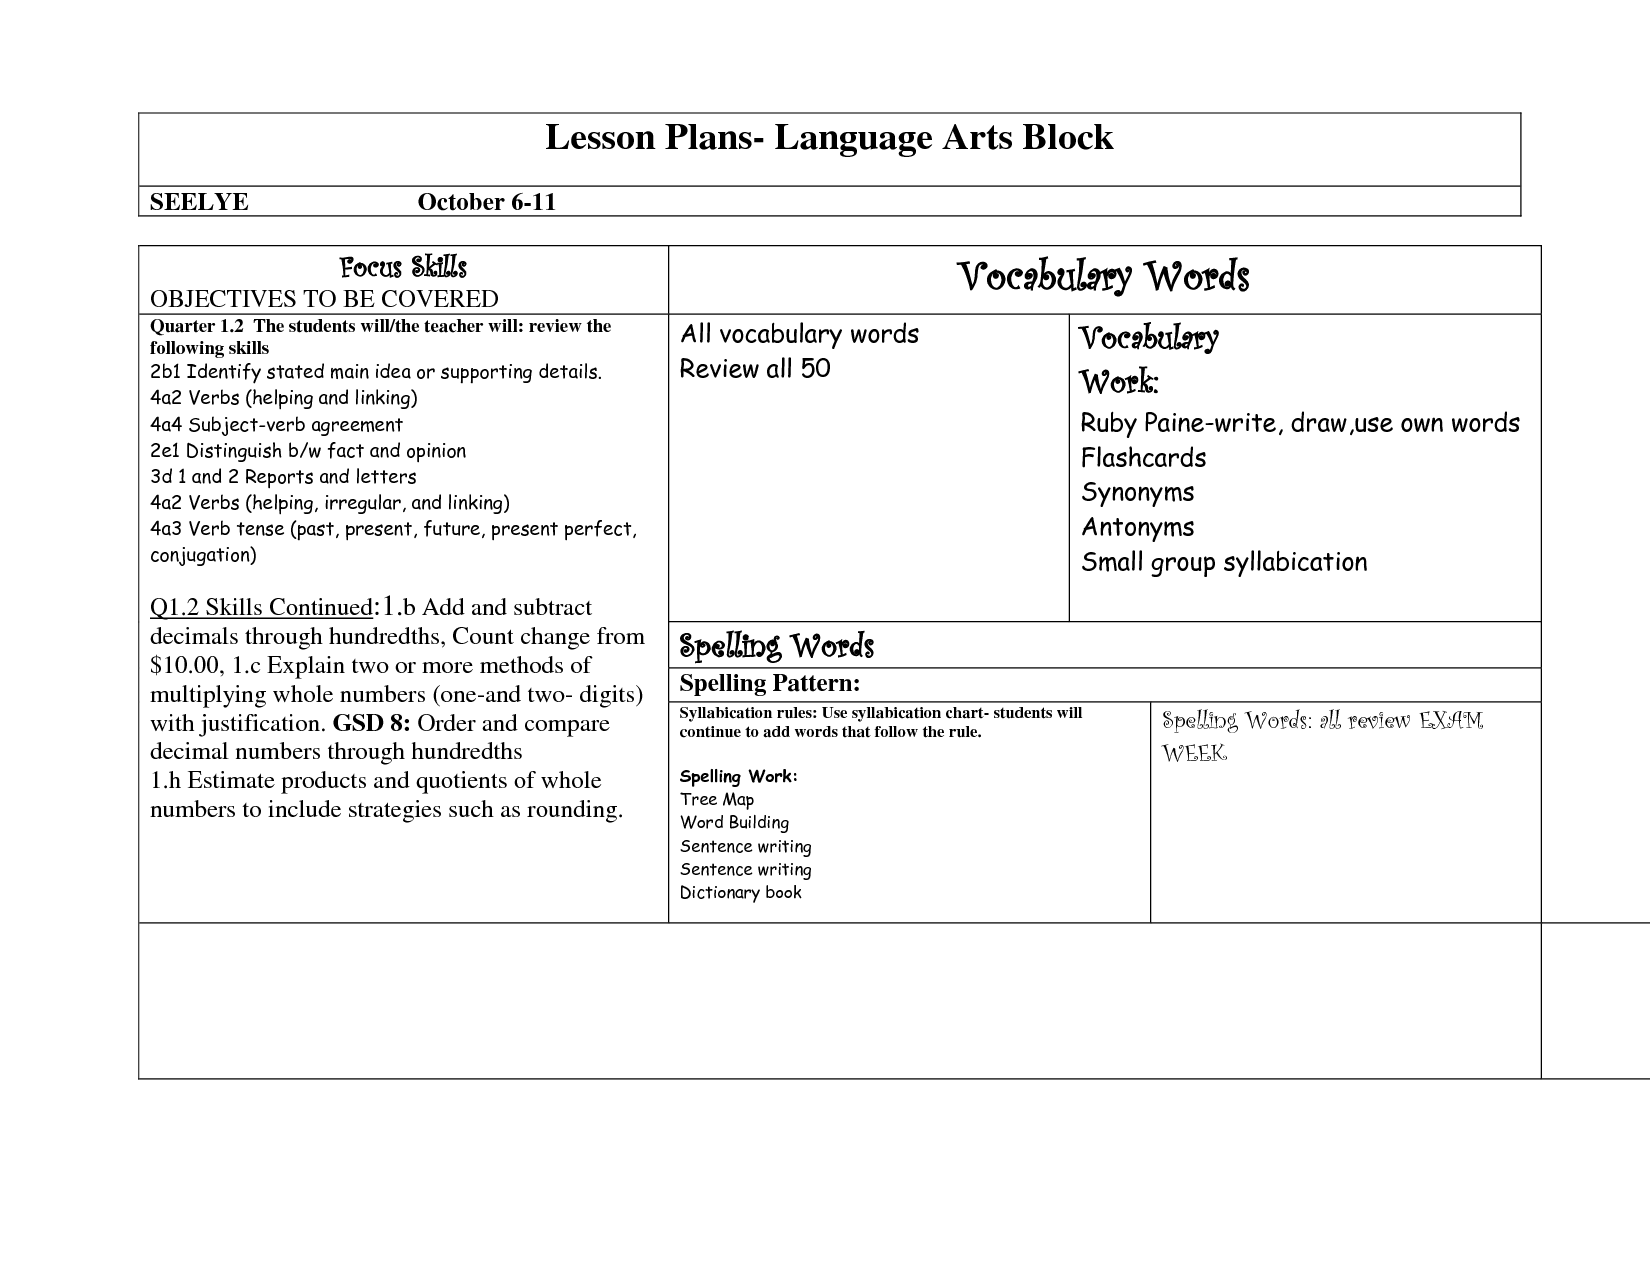 4th Grade Language Arts Lesson Plans Image